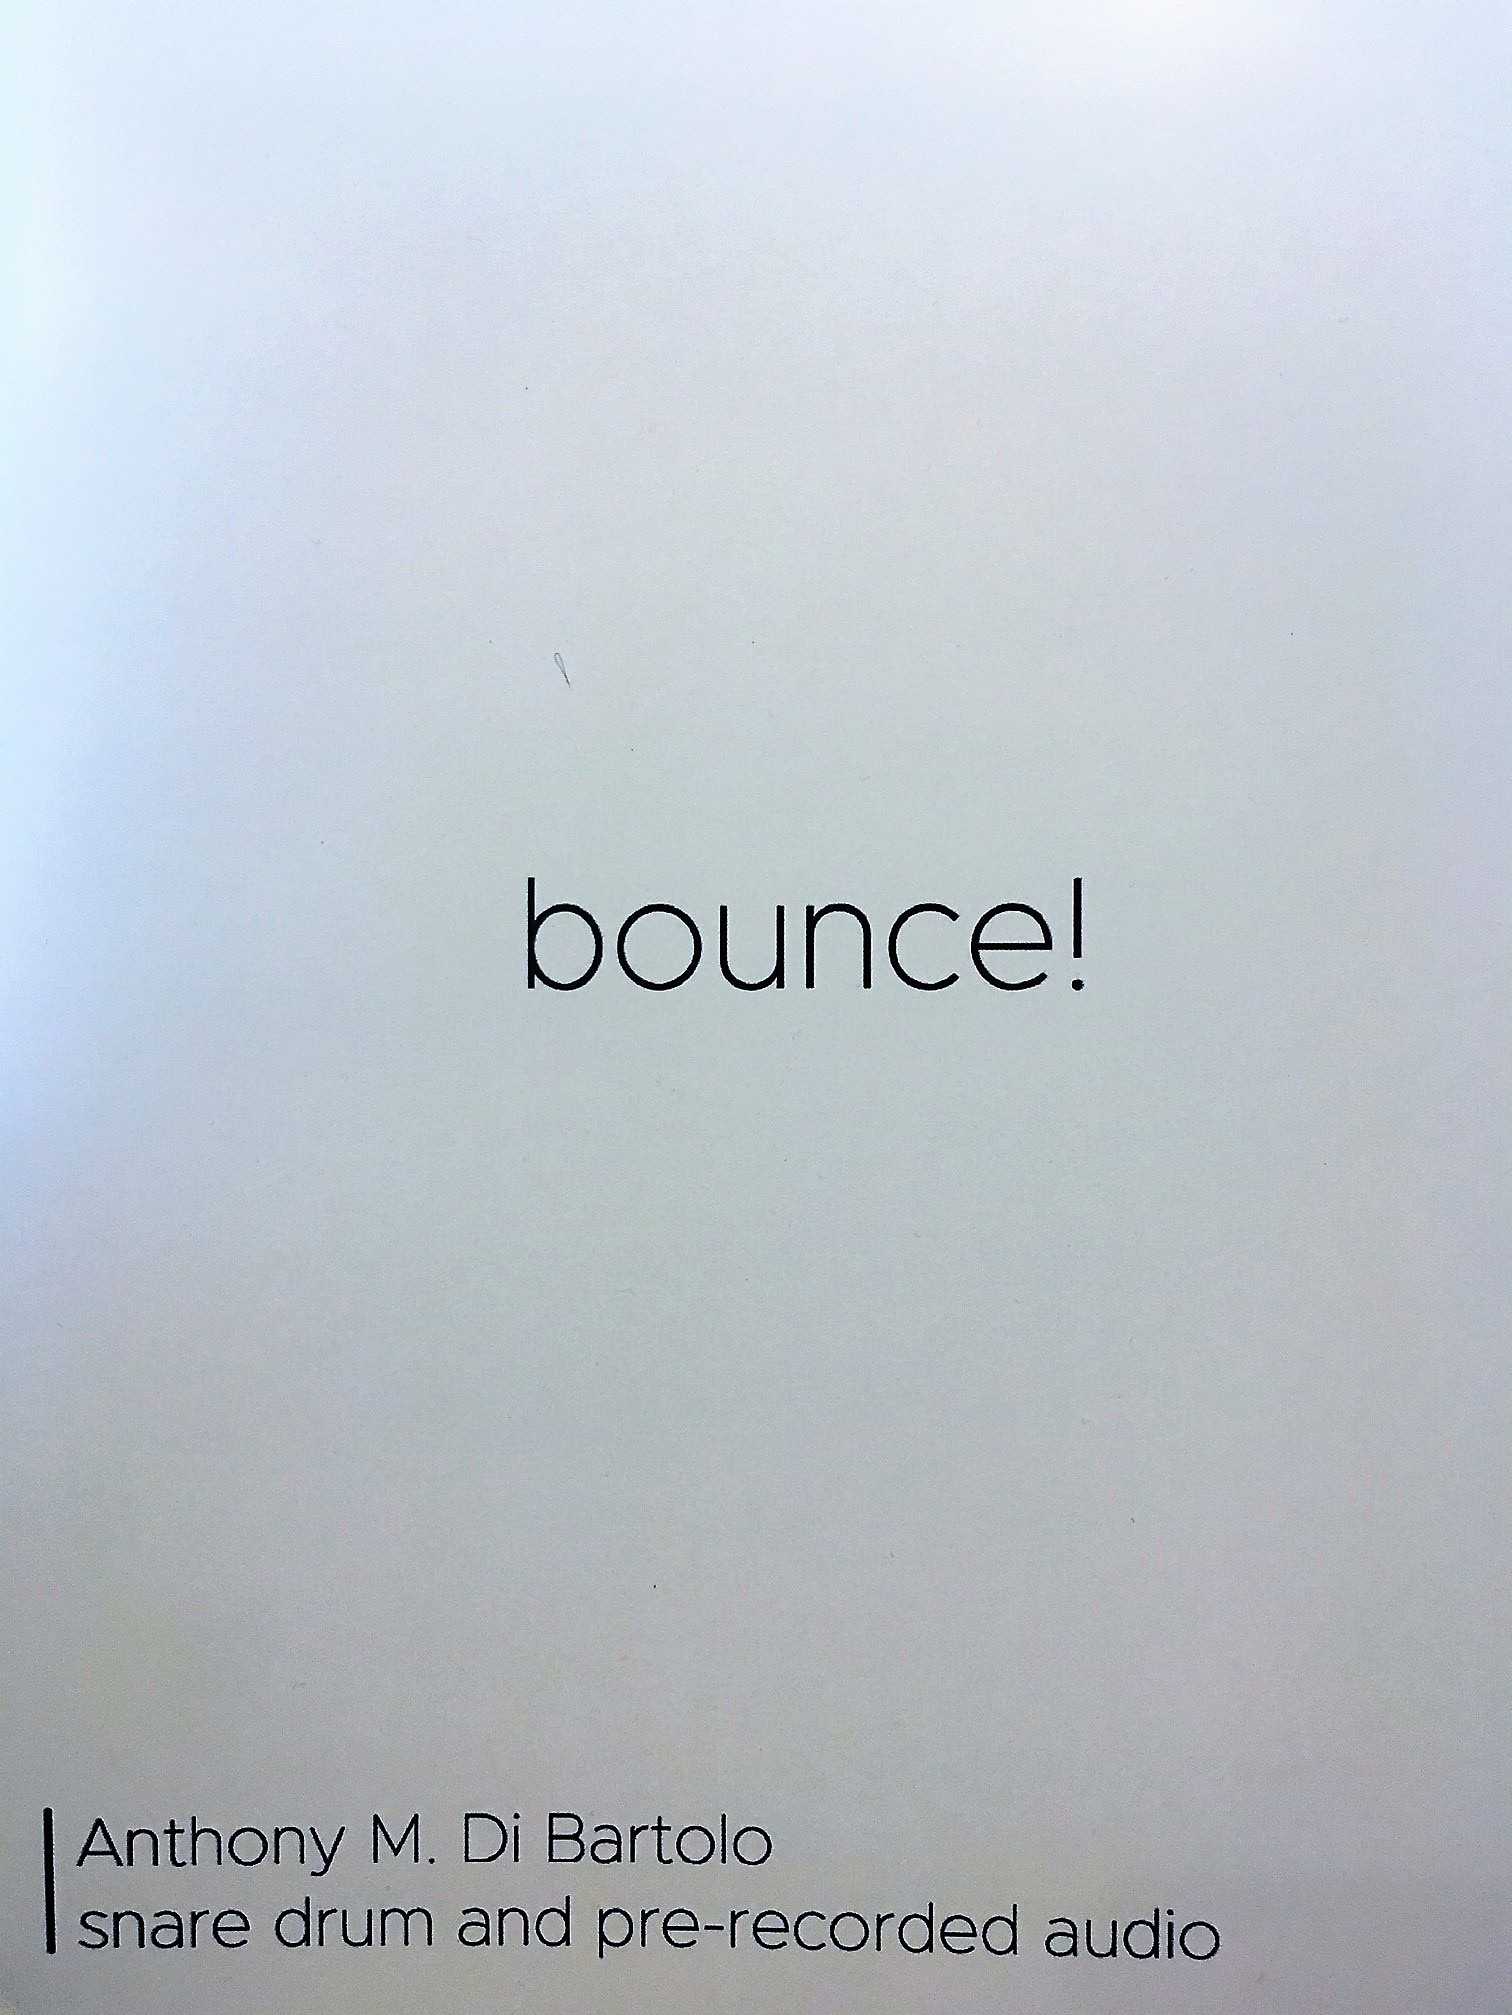 bounce! by Anthony Bartolo